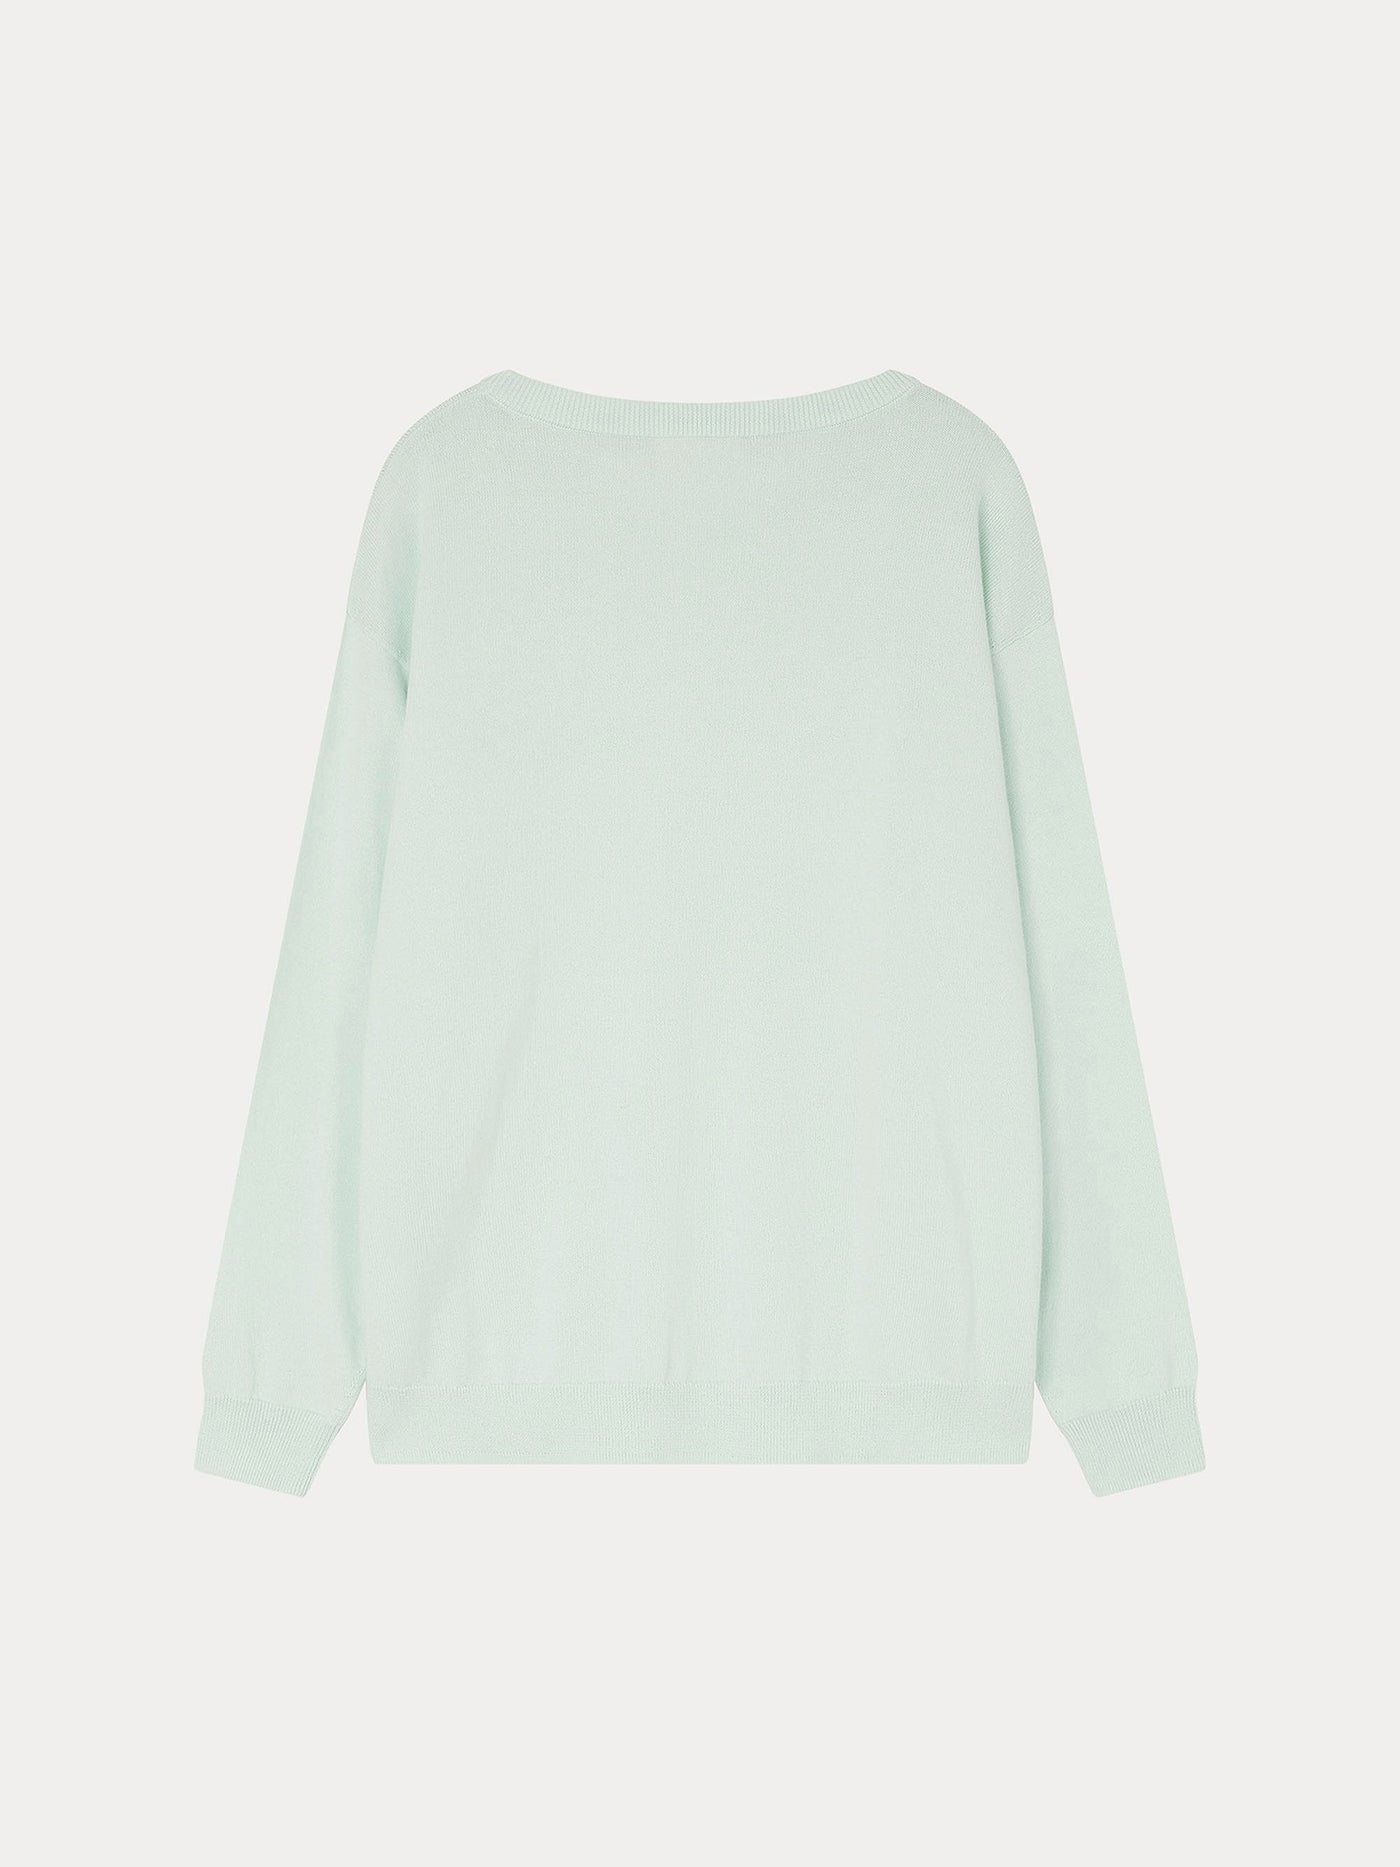 Crète Sweater light green